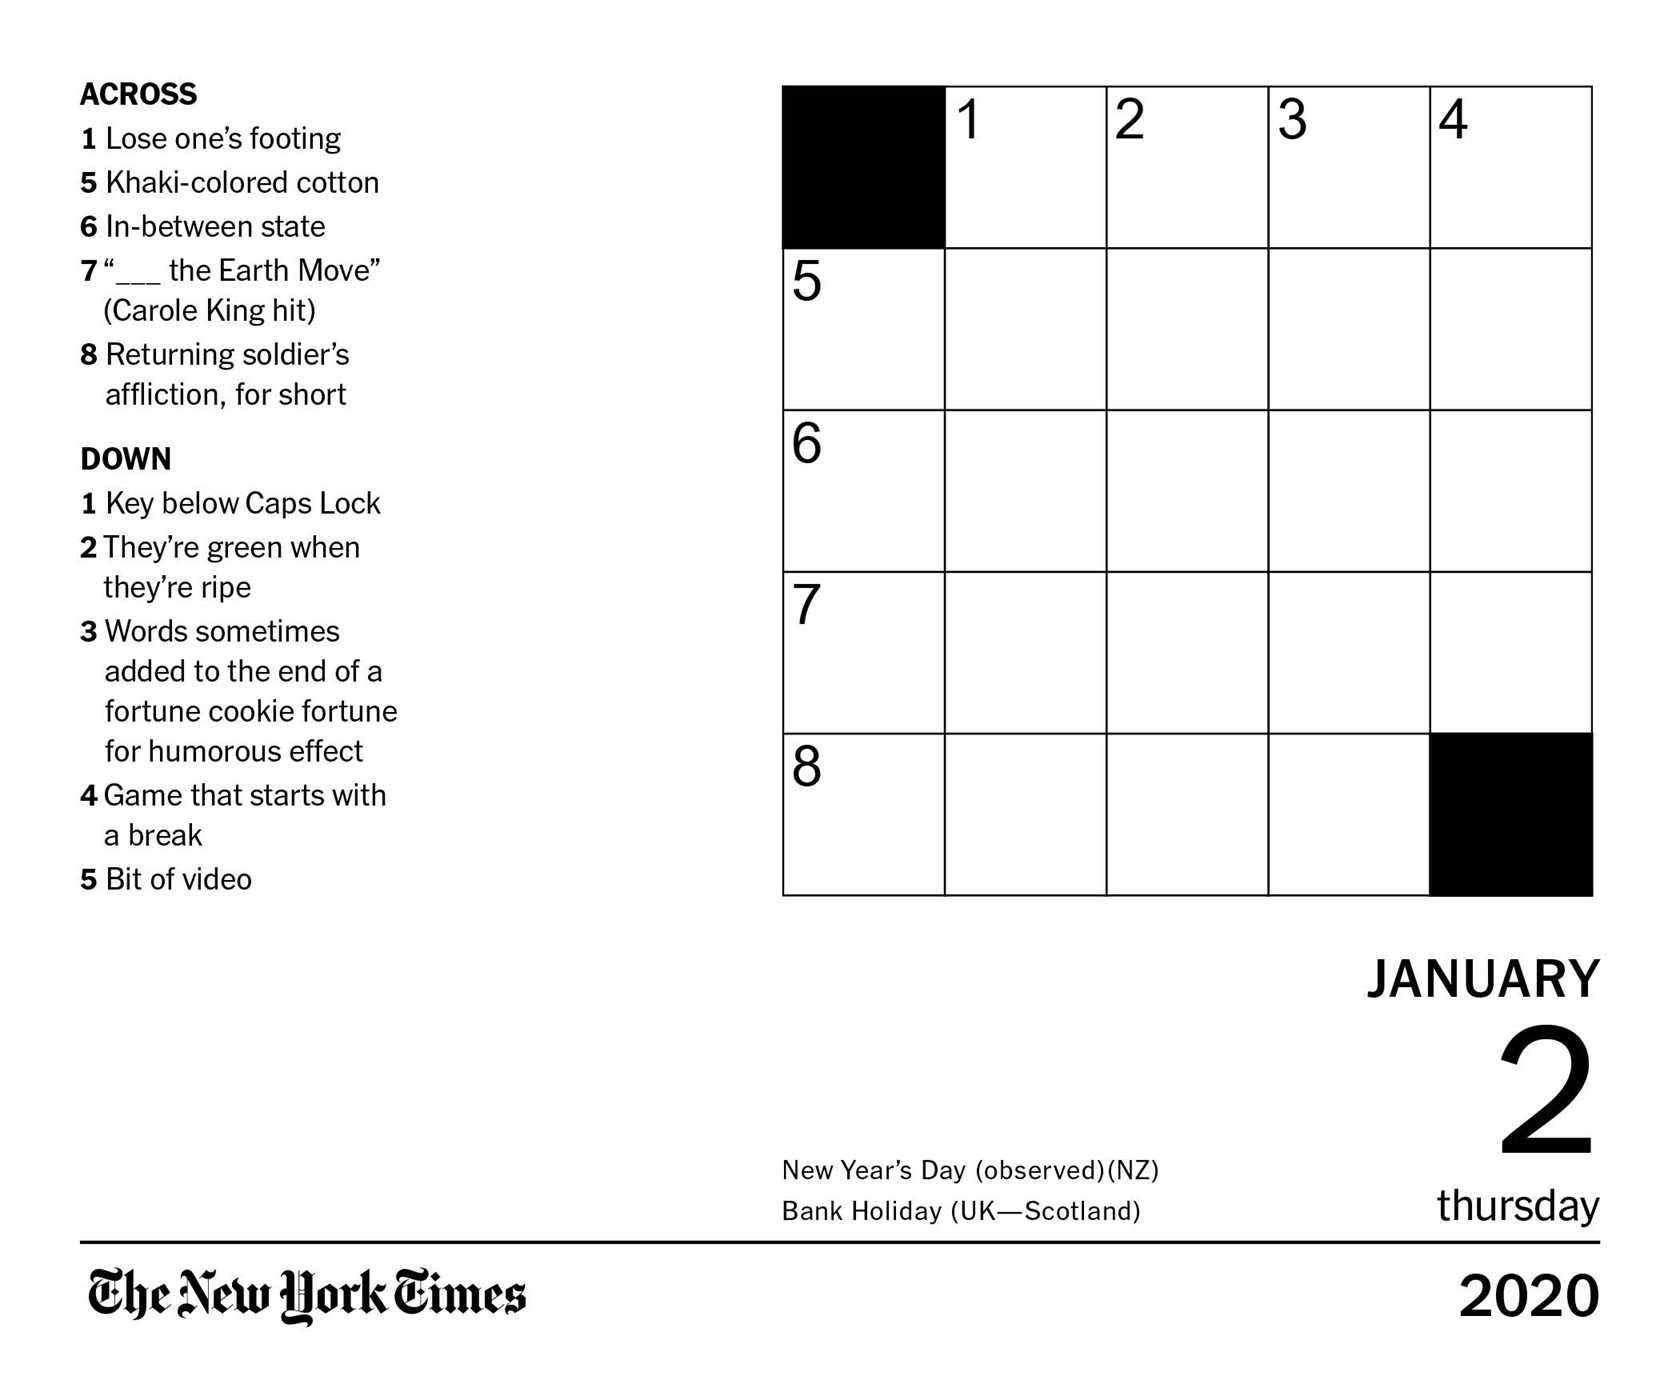 New York Times mini crossword leaderboard scraper